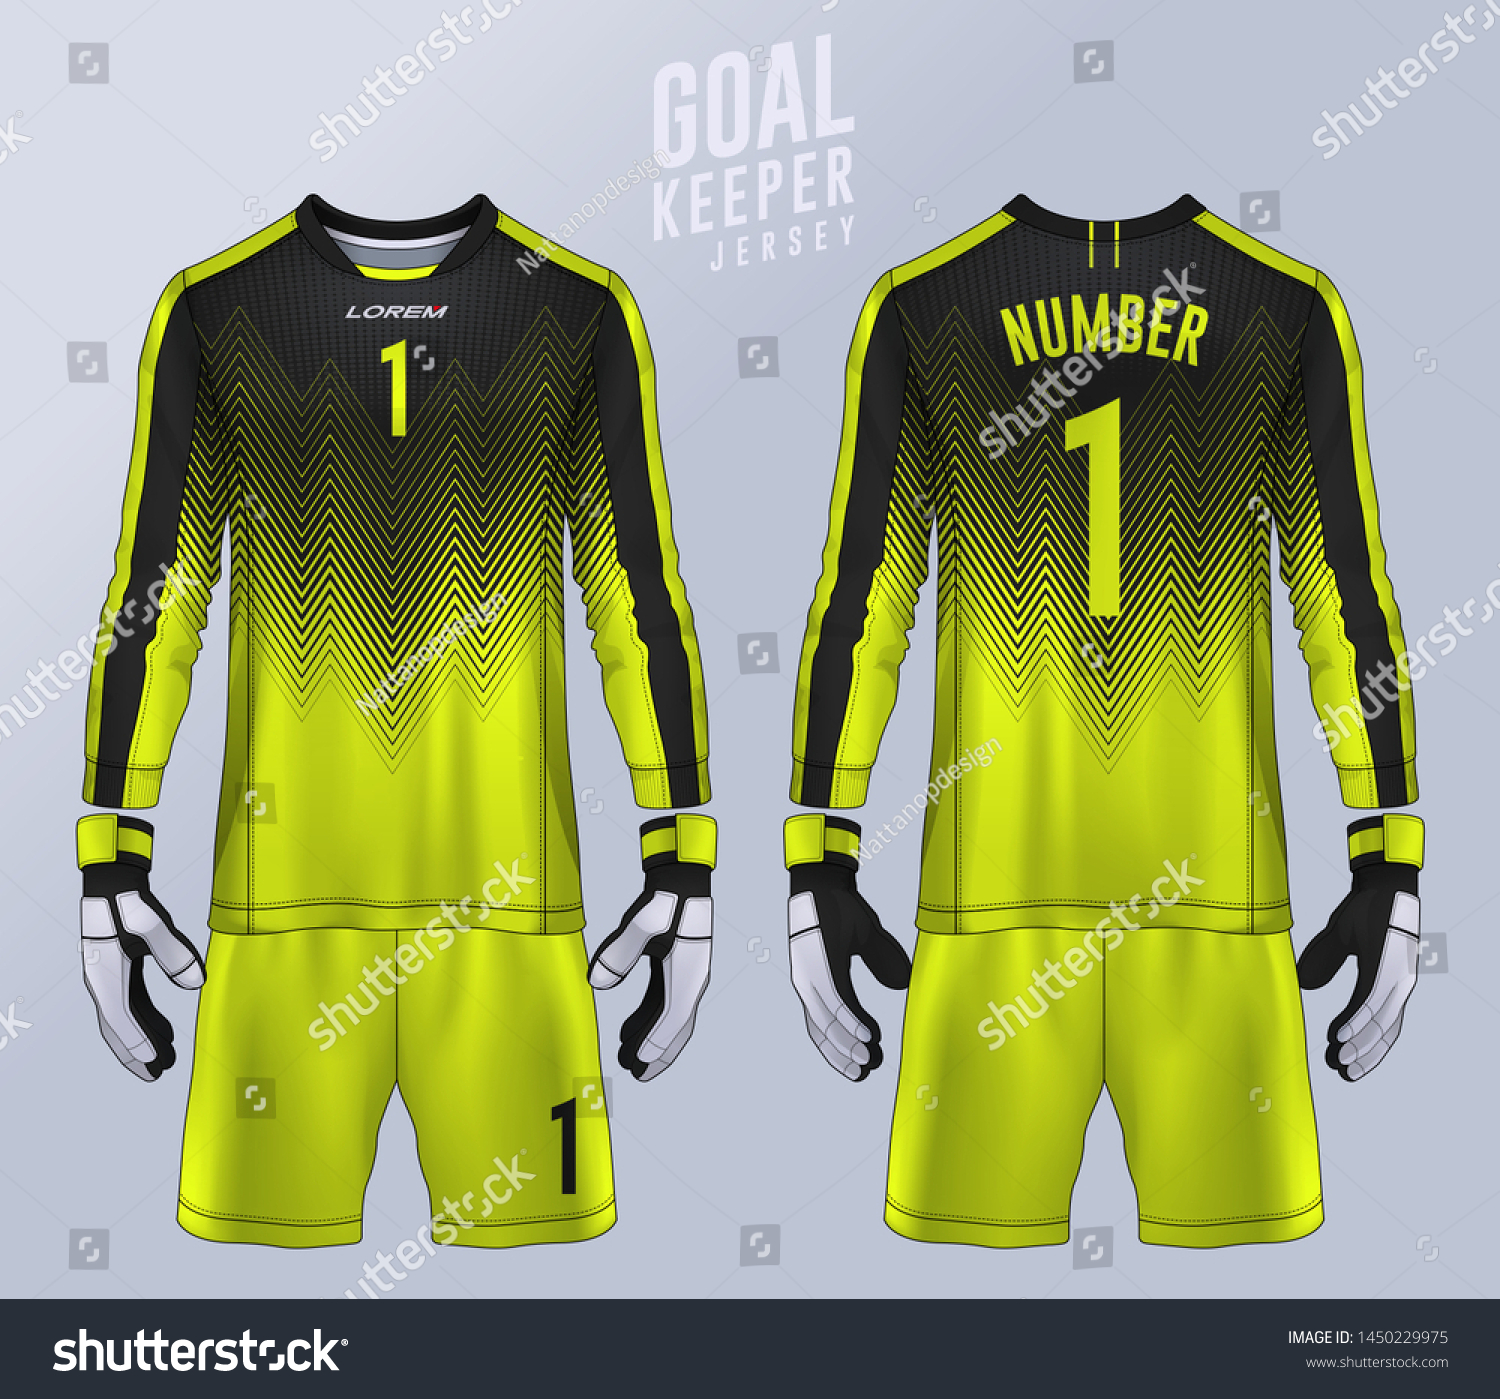 Download Goalkeeper Jerseytshirt Sport Design Template Long Stock Vector Royalty Free 1450229975